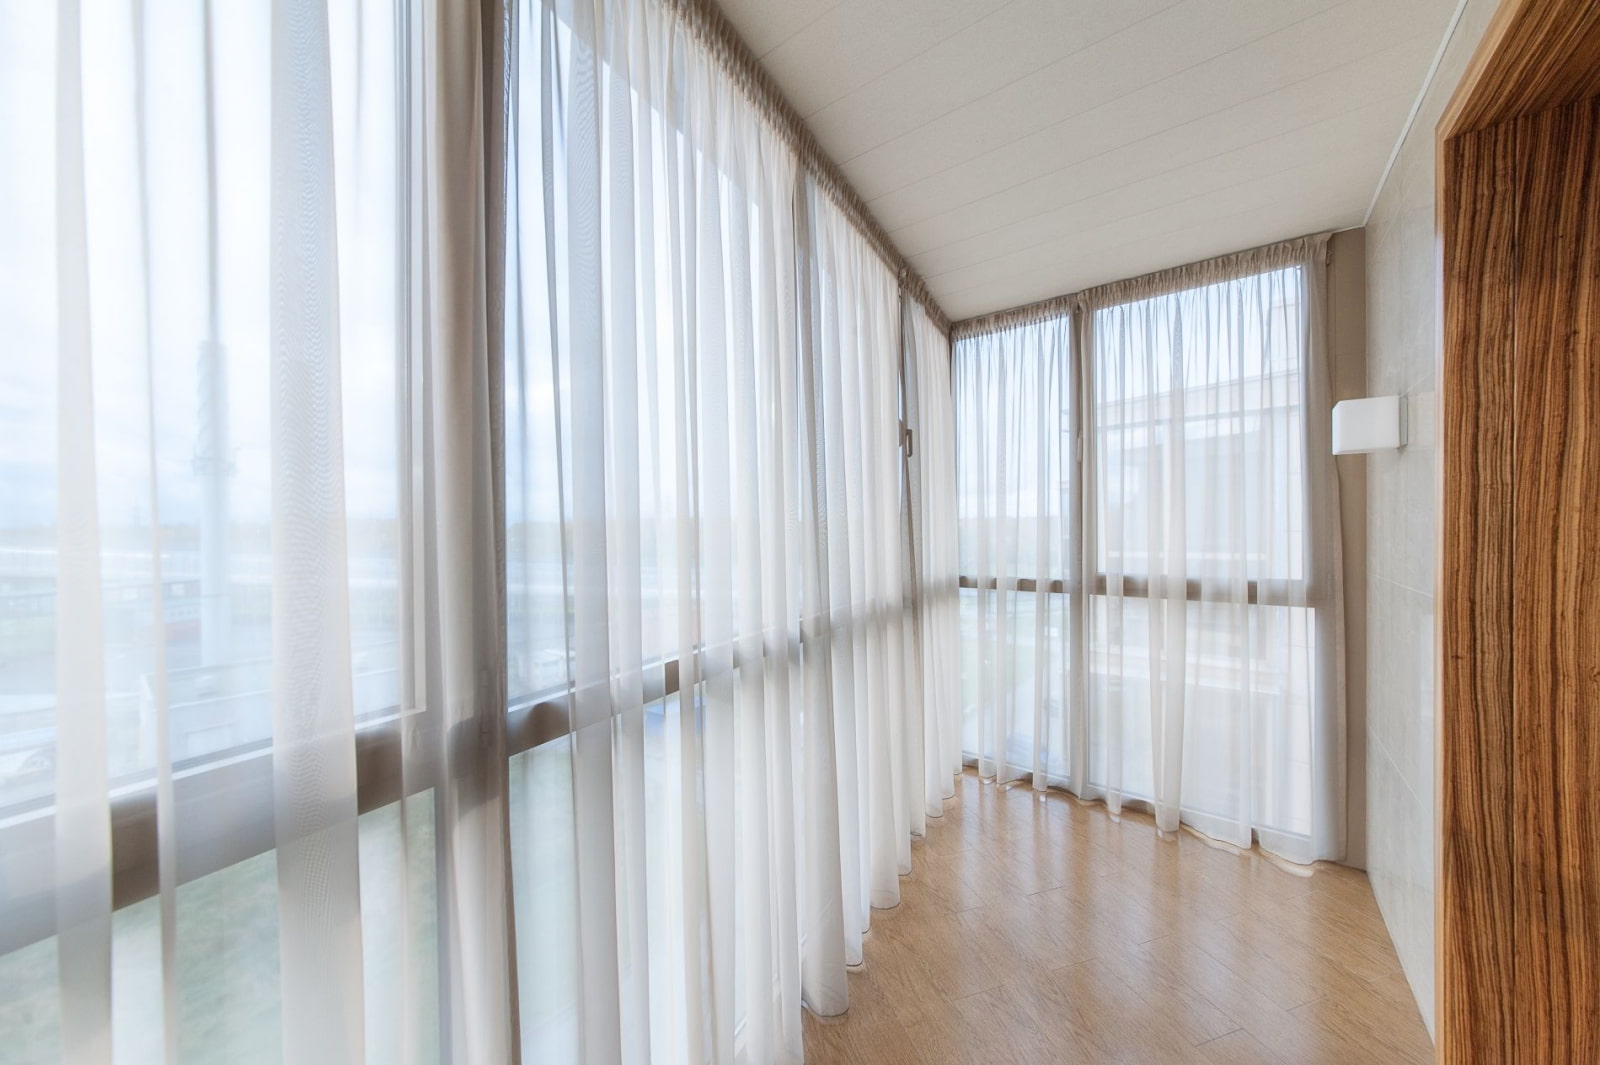 Жалюзи на балкон с раздвижными окнами: фото вариантов оформления